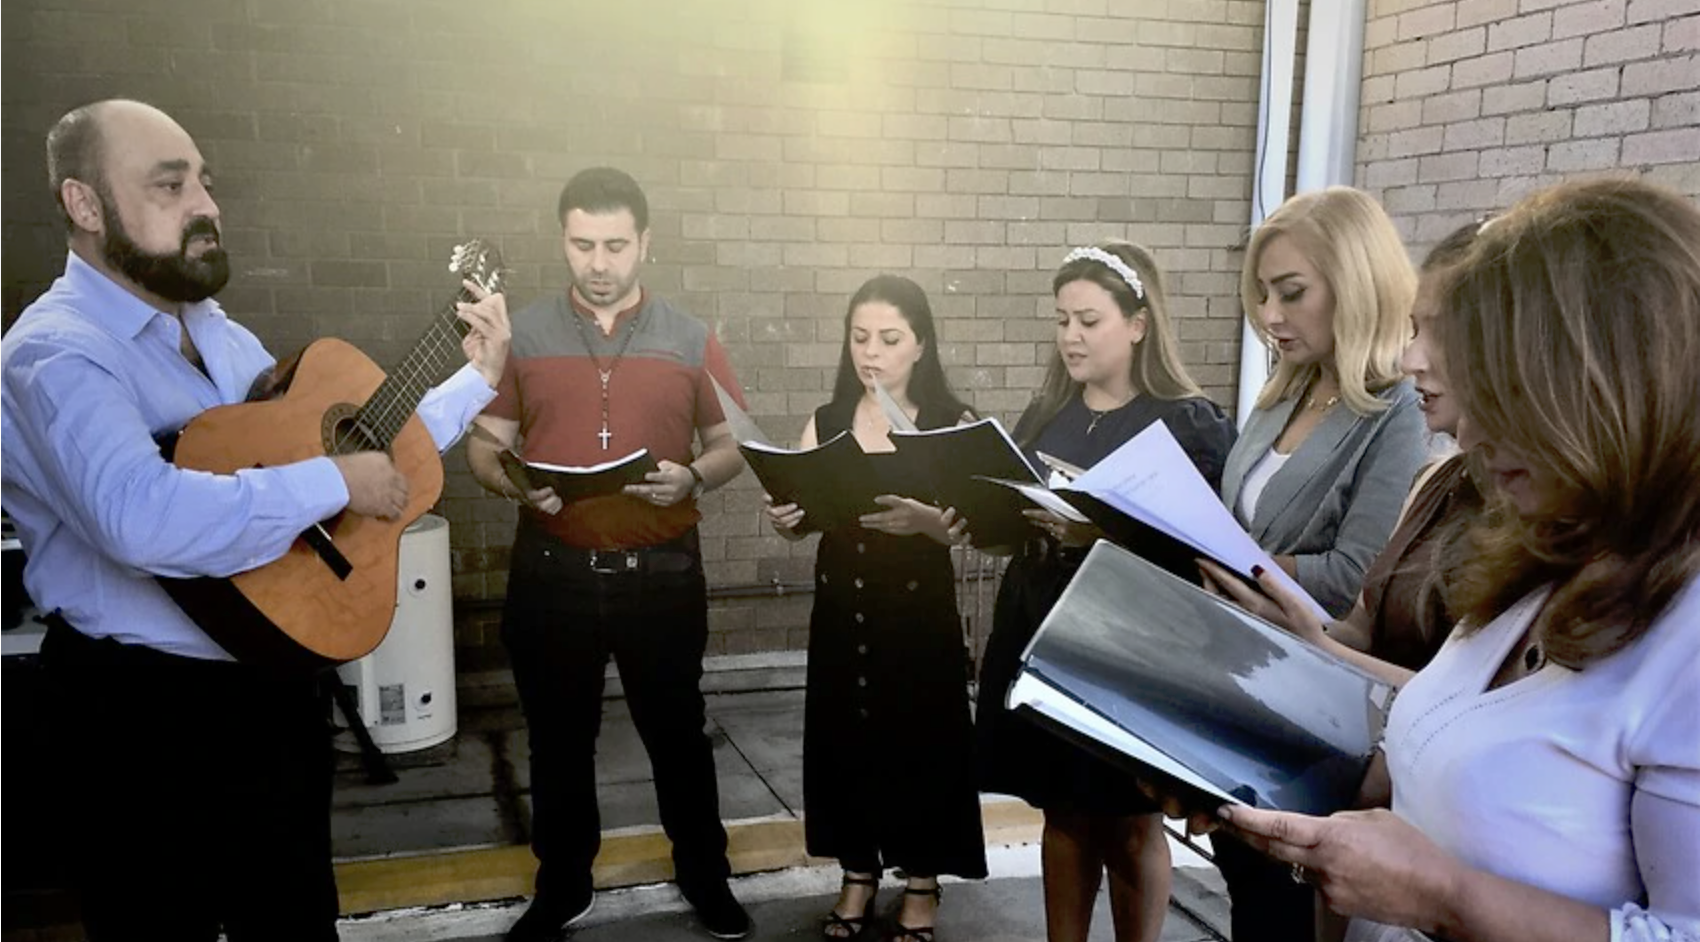 Iraqi music teacher helping refugees in Australia to heal their trauma; report